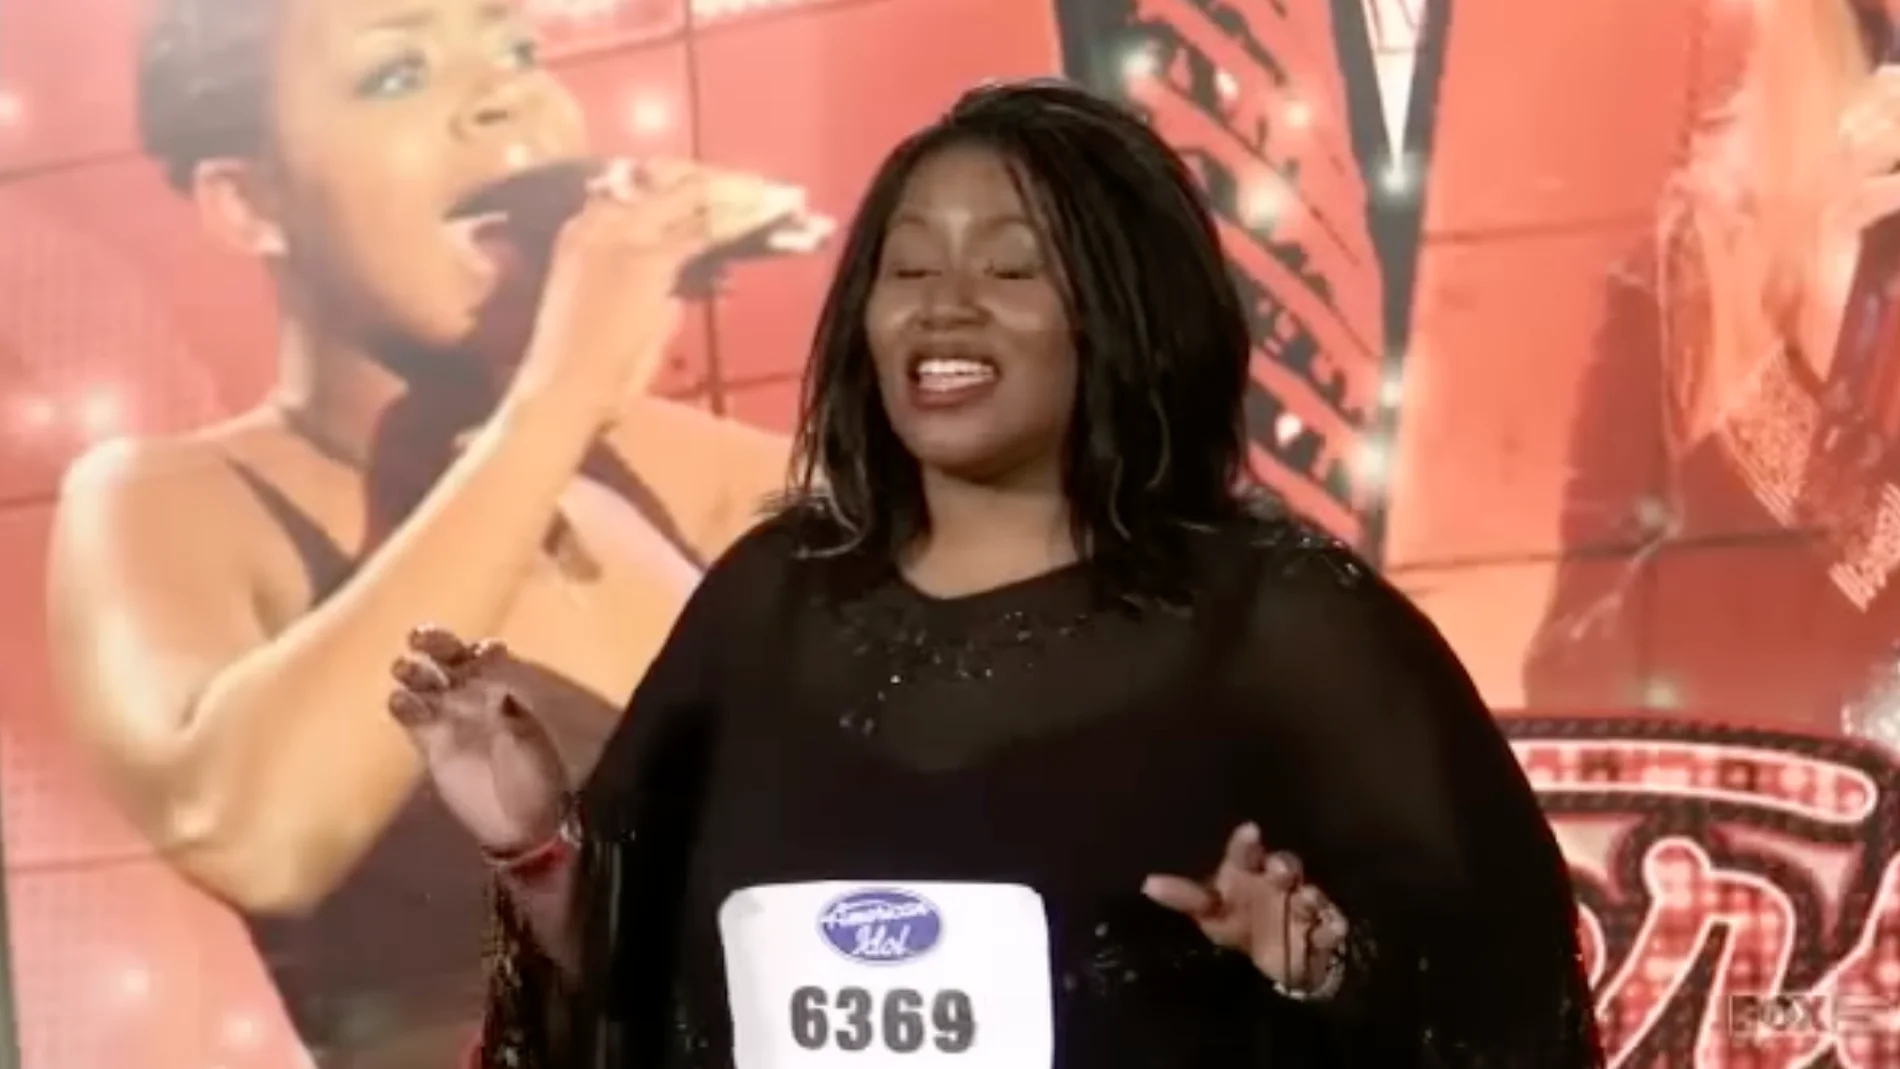  Mandisa durante su casting para "American Idol"